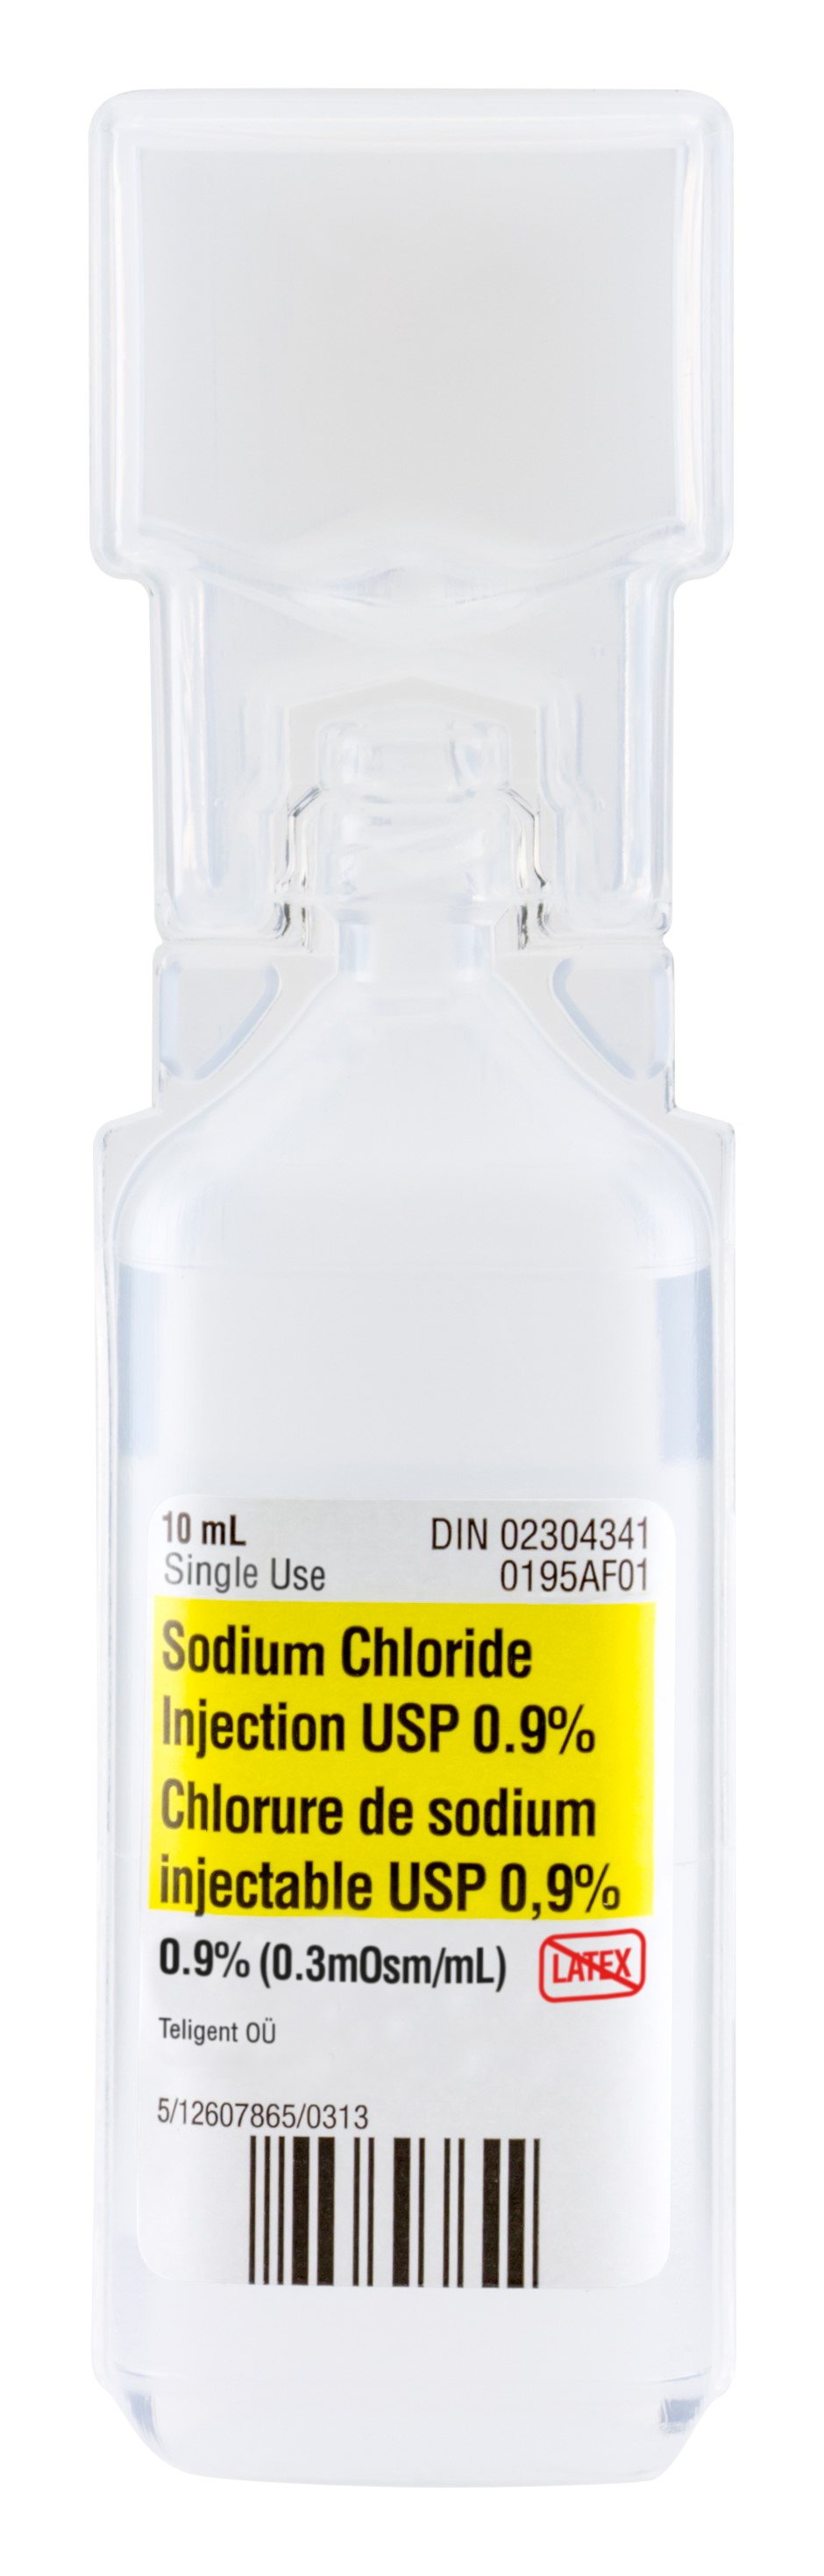 [AMB] (POM) Sodium Chloride Injection - 0.9%/10ml - 10ml Ampoule - (Pack 10) | Medical Supermarket